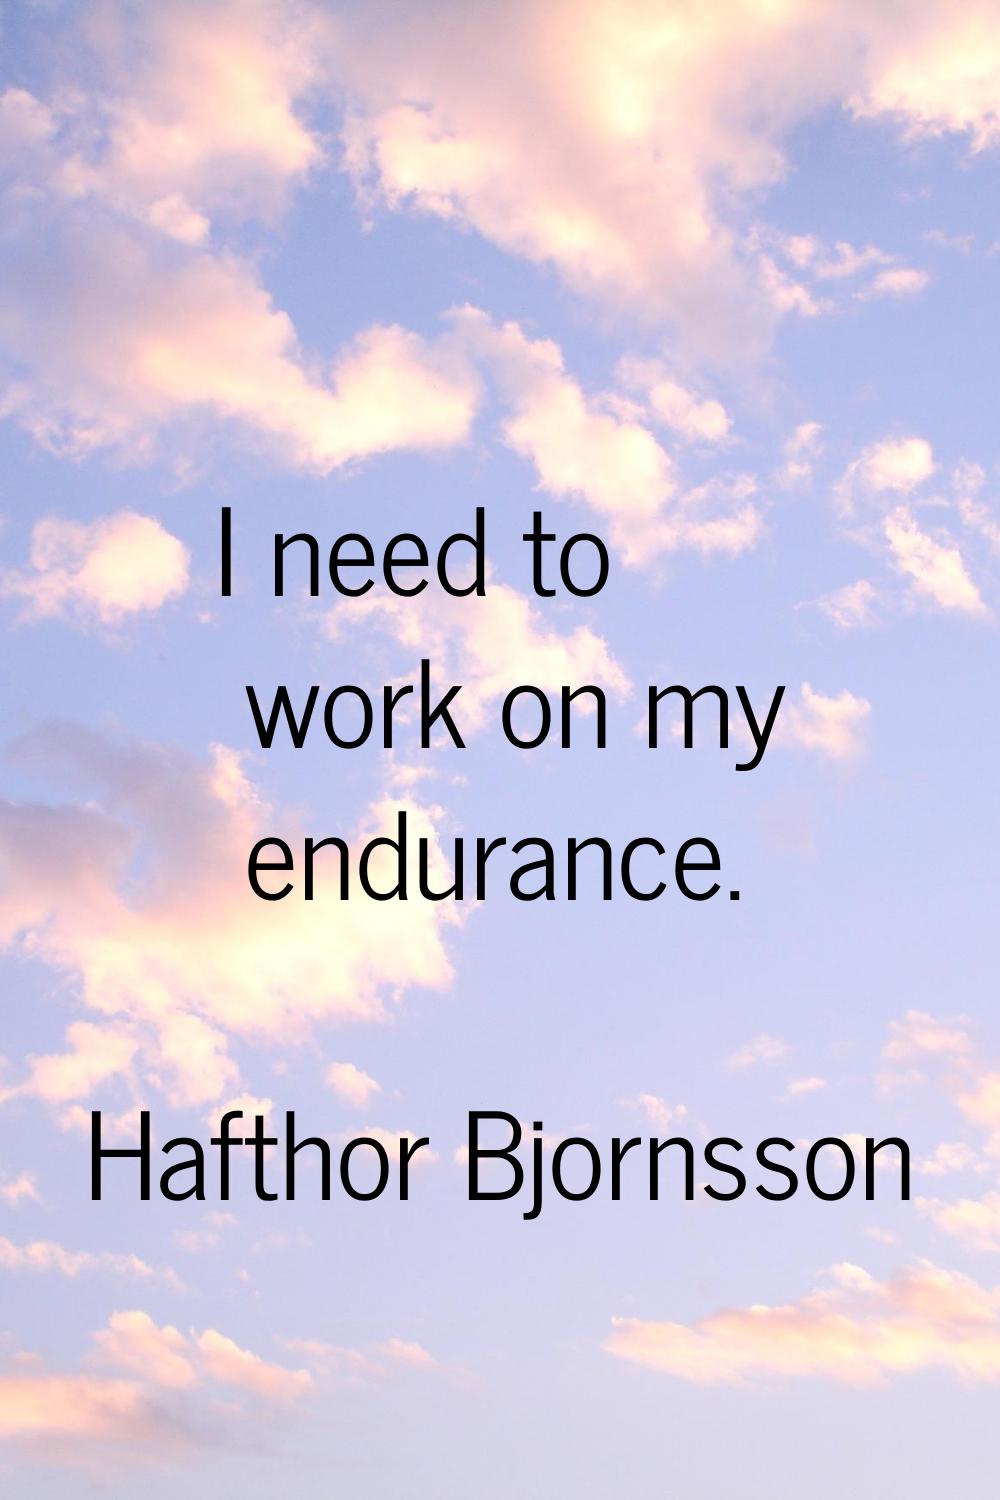 I need to work on my endurance.